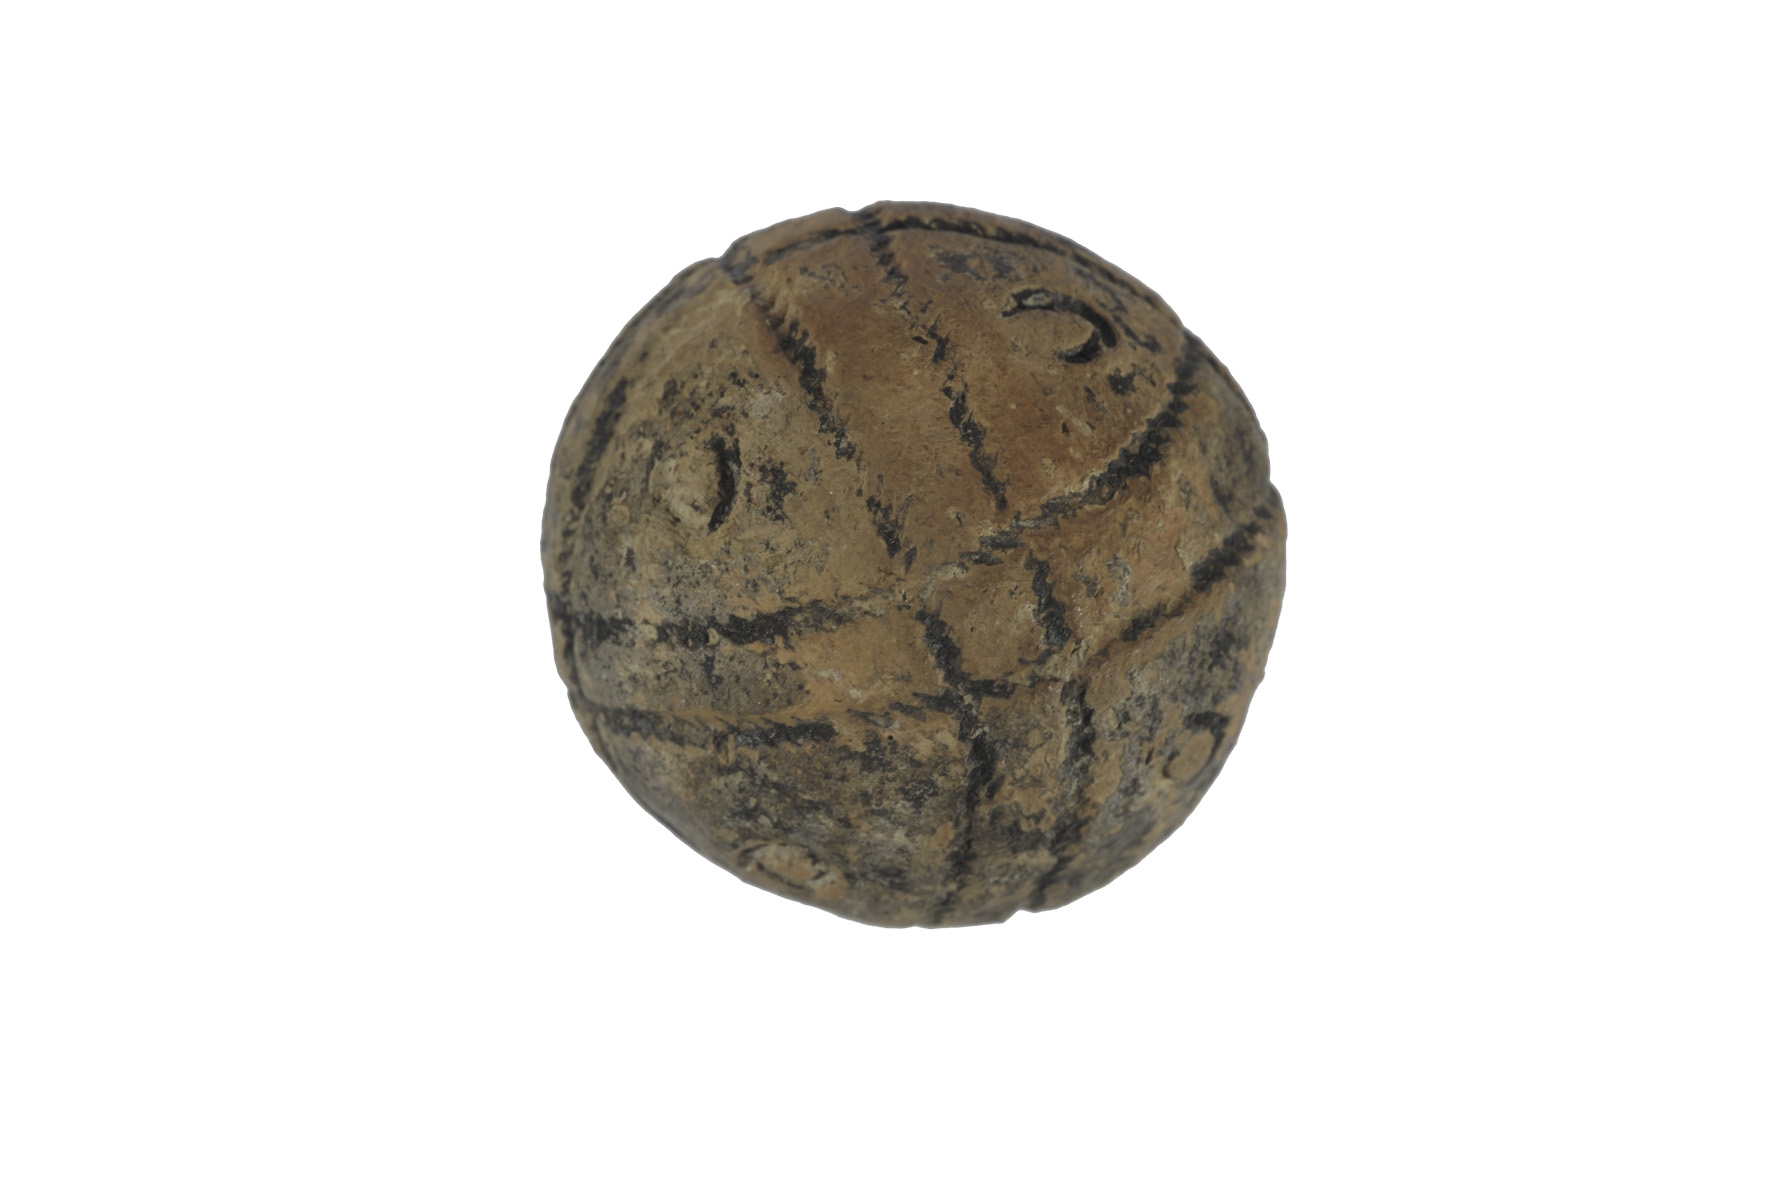 pallina/sonaglio - Cultura protoveneta (XII-X sec. a.C)